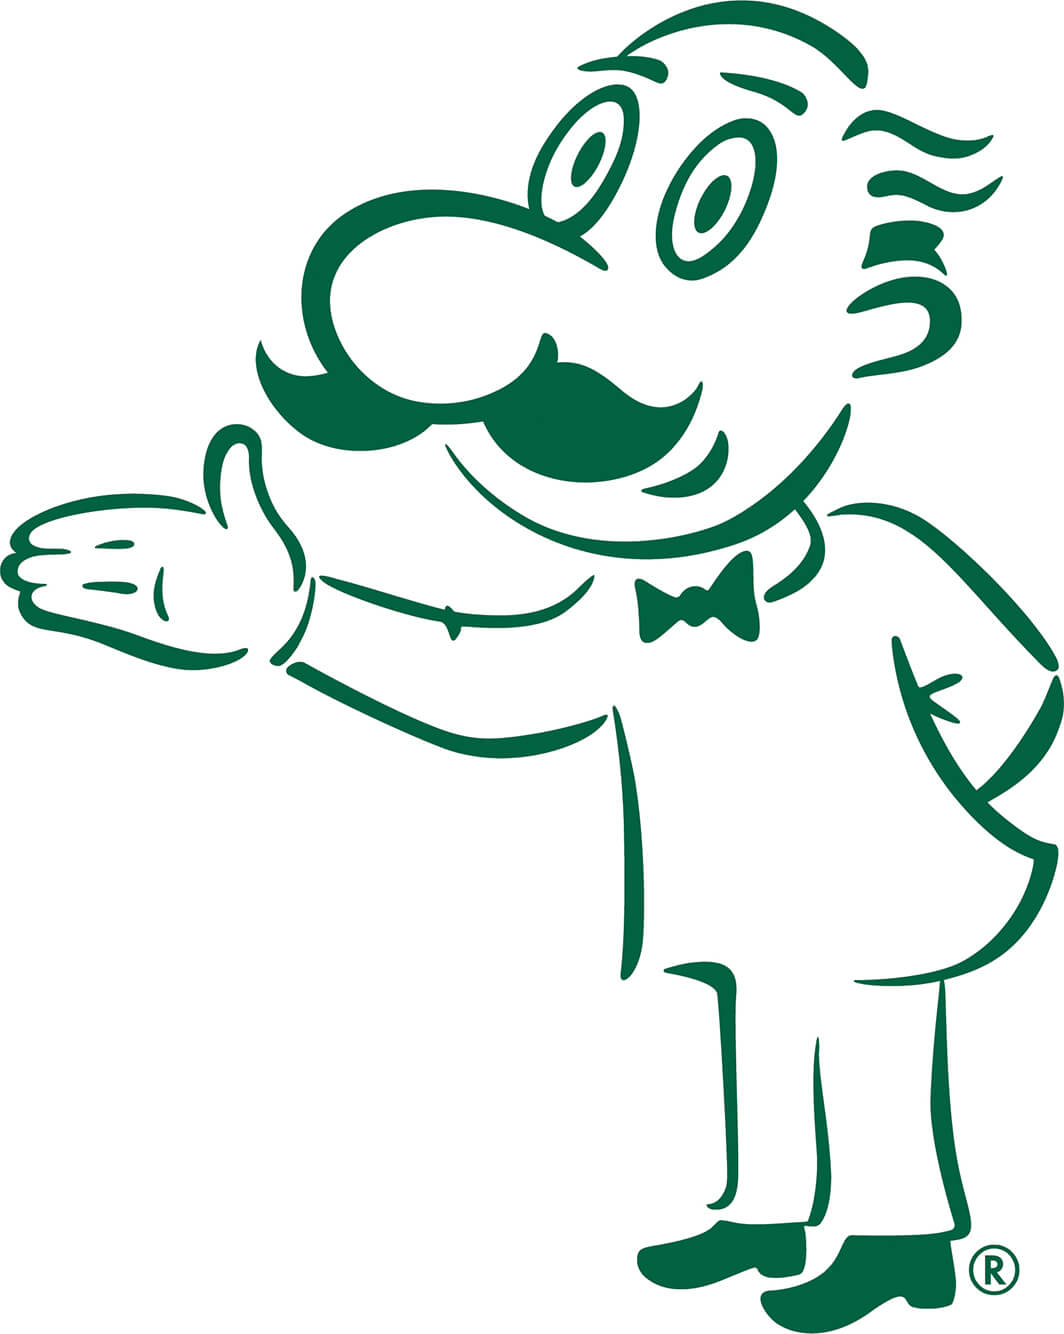 Luigi says pick your location!